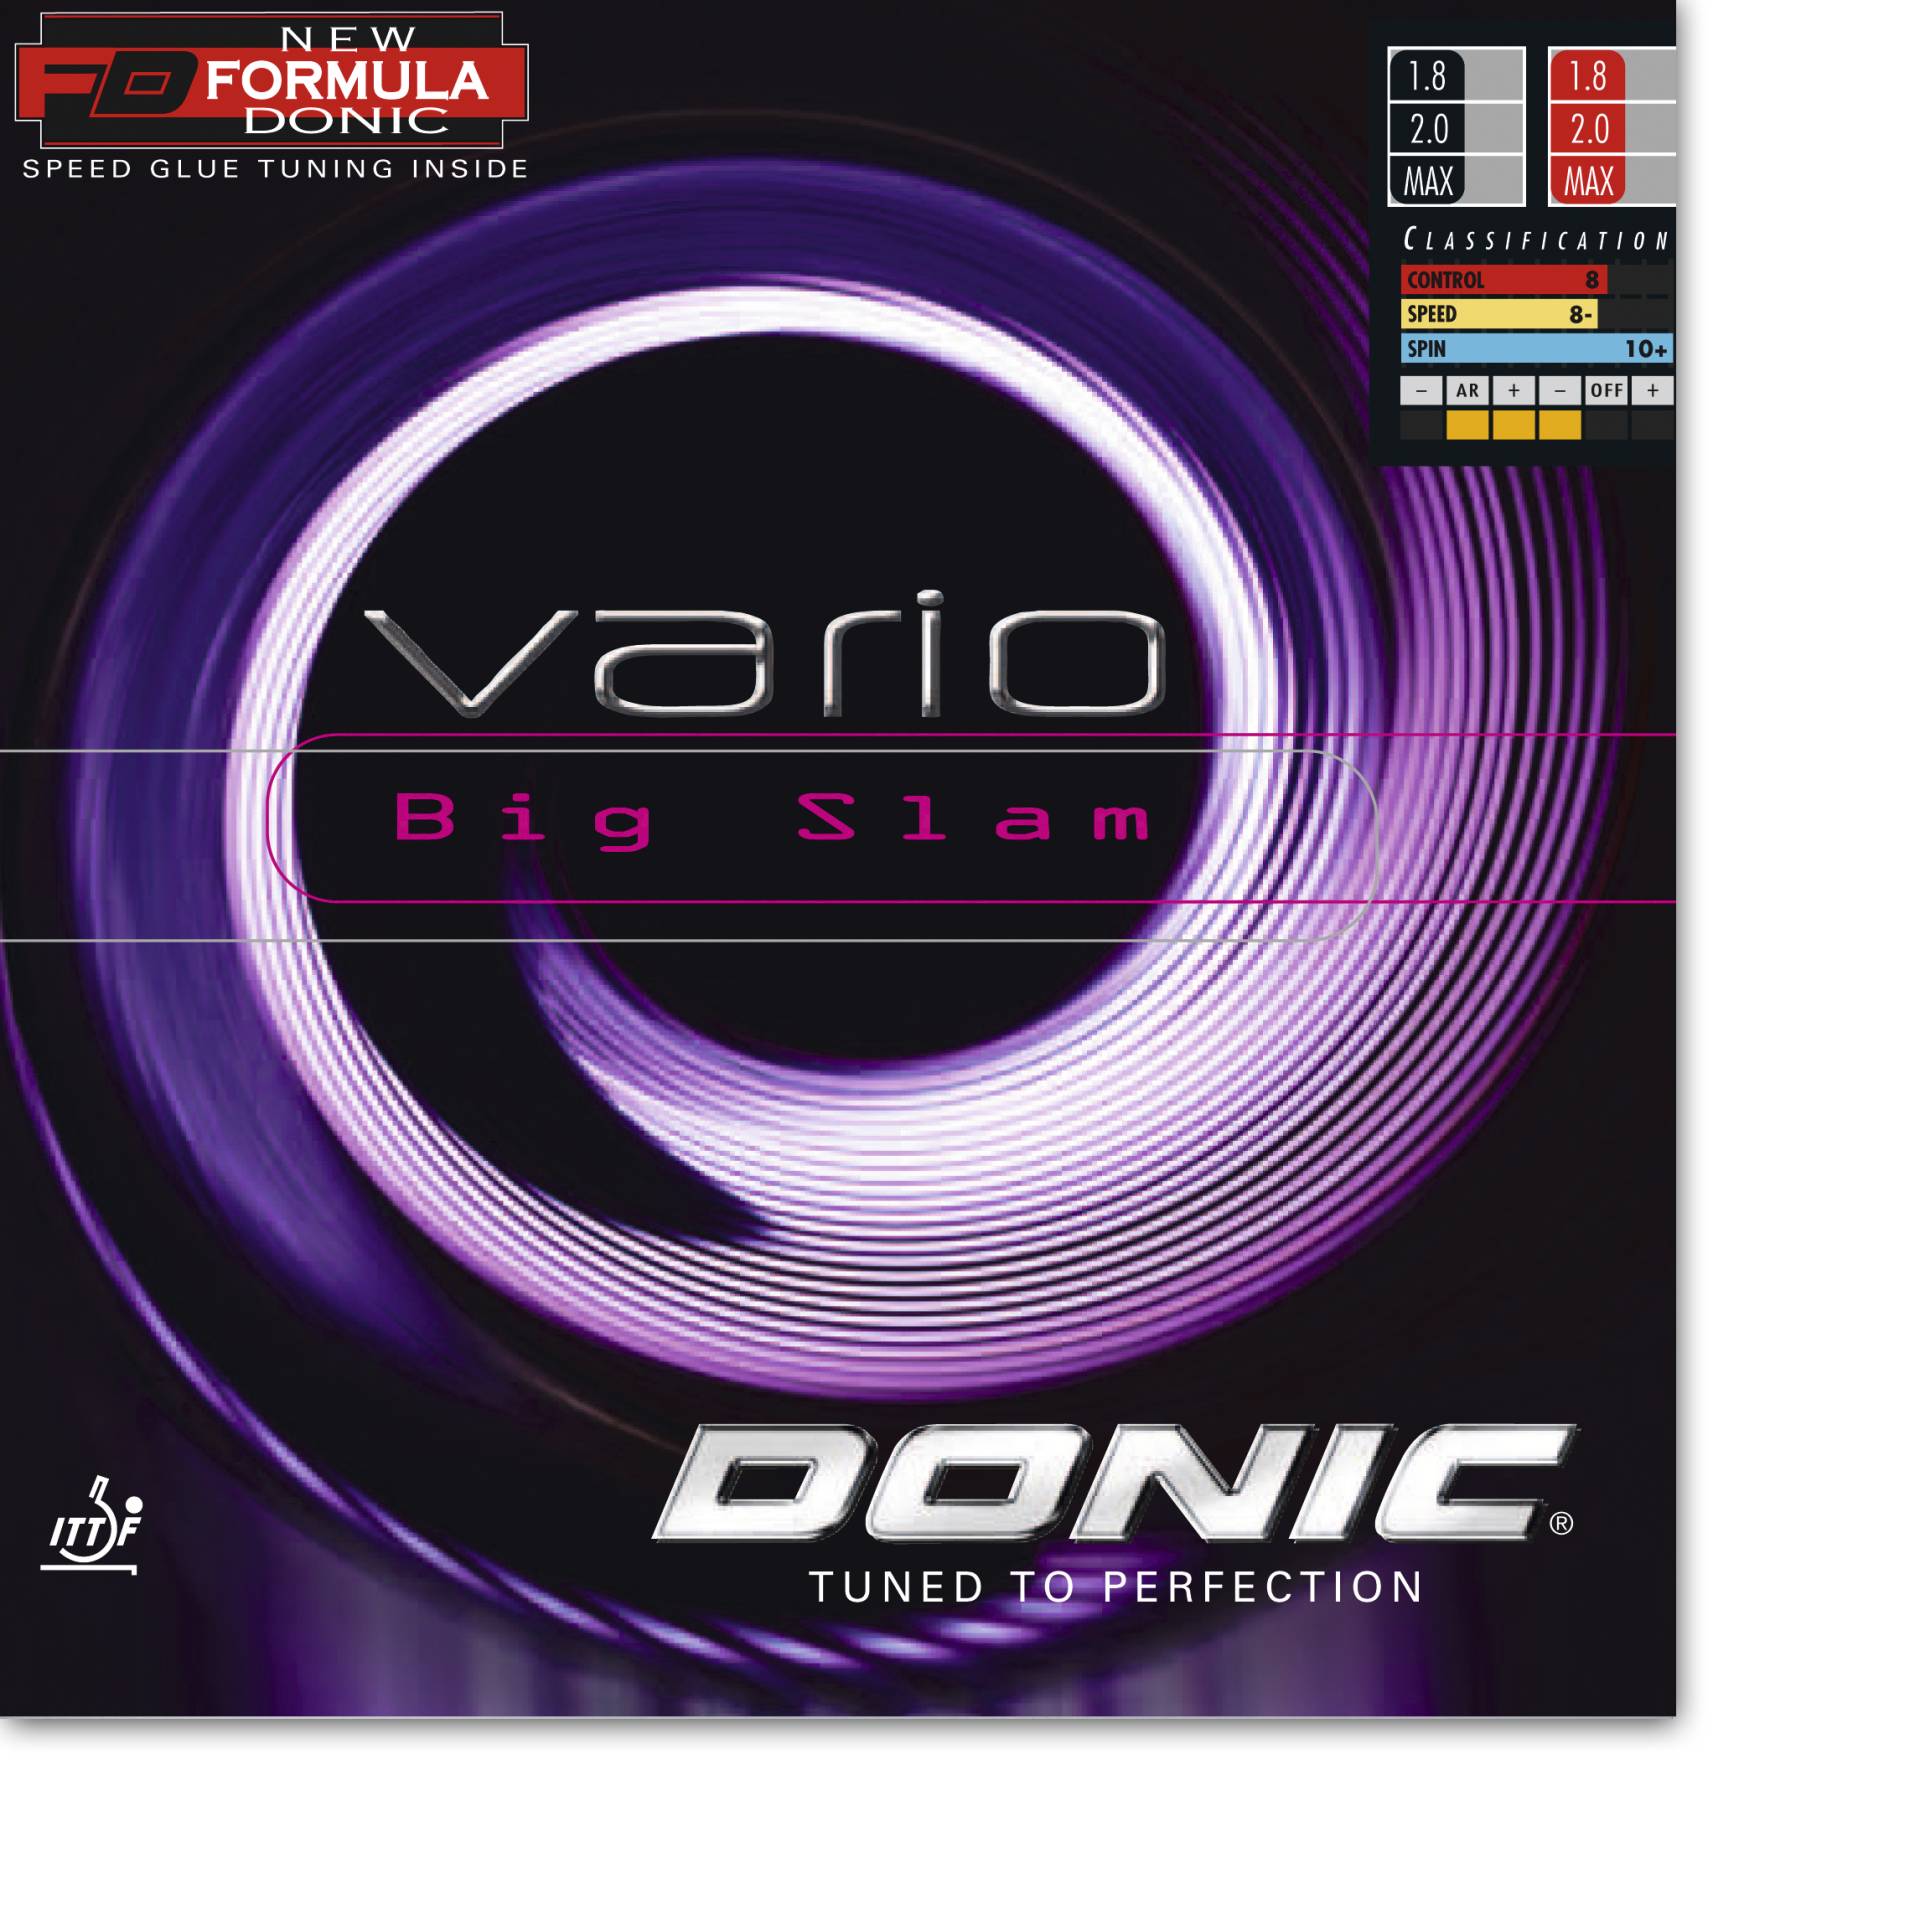 Donic Vario Big Slam - Tischtennis Belag von Donic